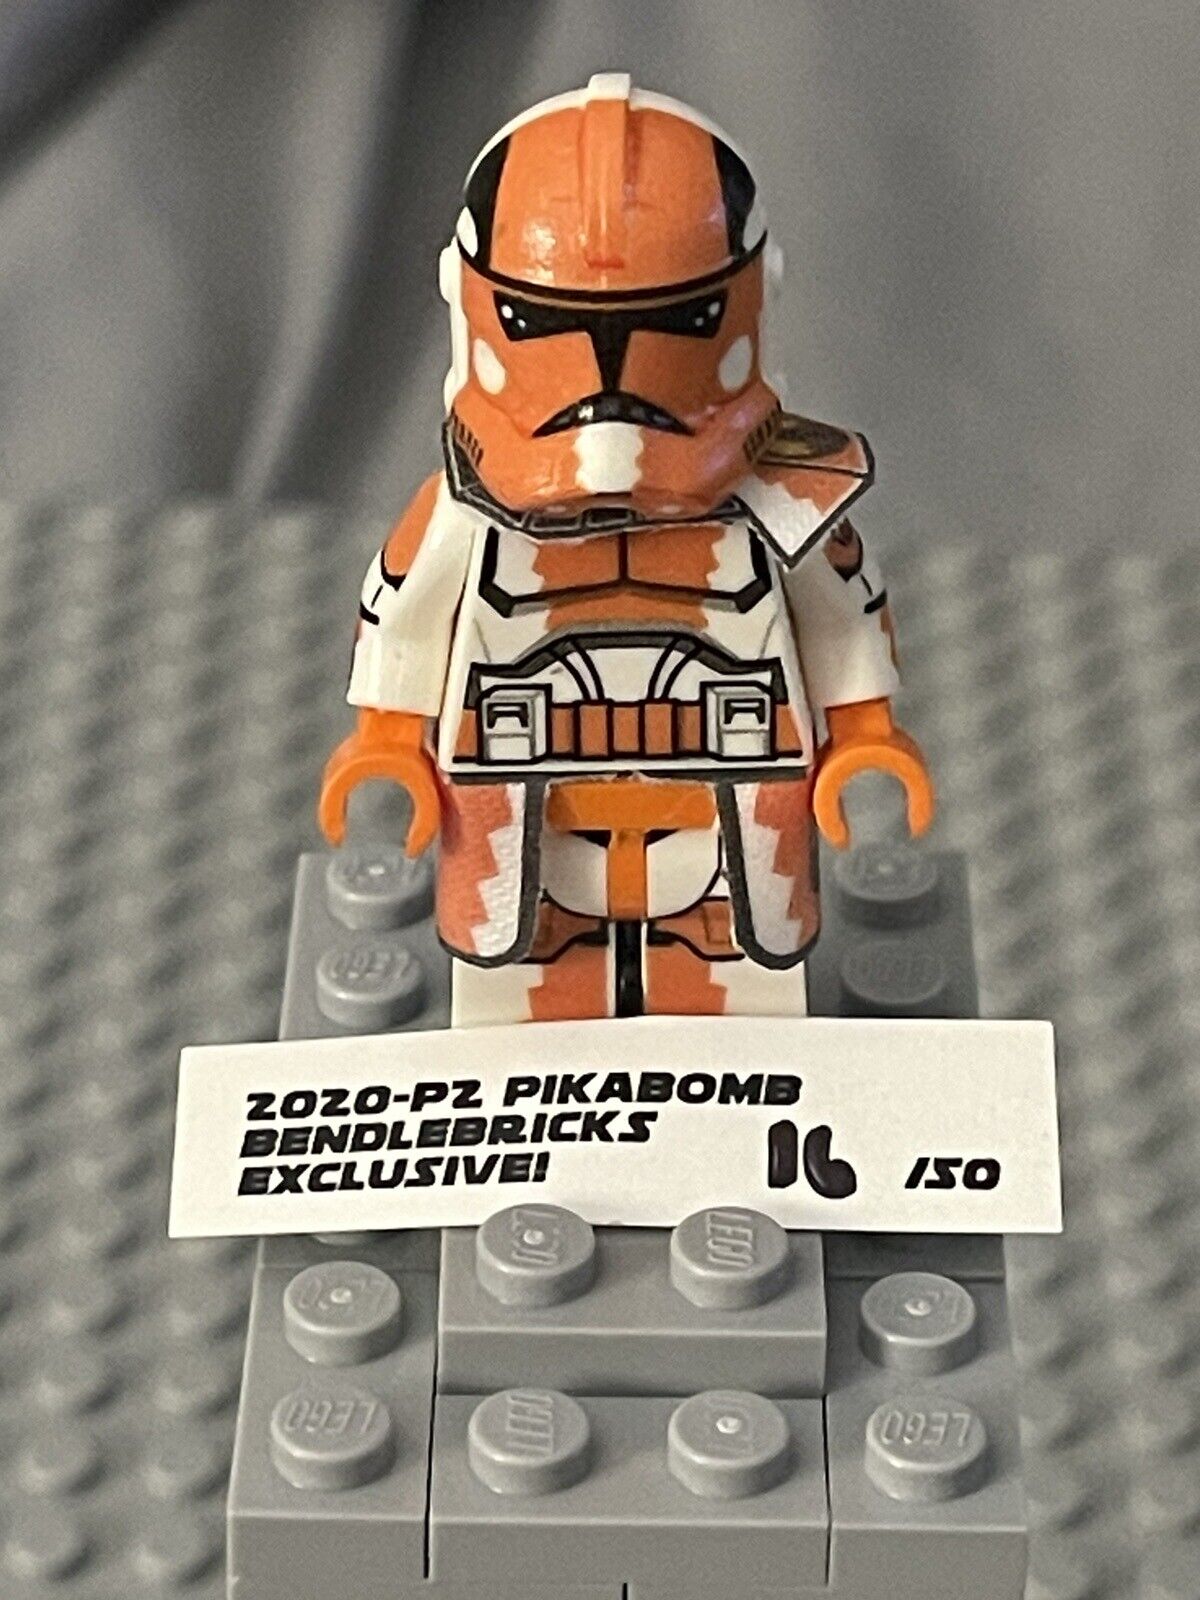 Lego Star Wars Pikabomb Custom Clone Bendlebricks 16/50 Limited Run!